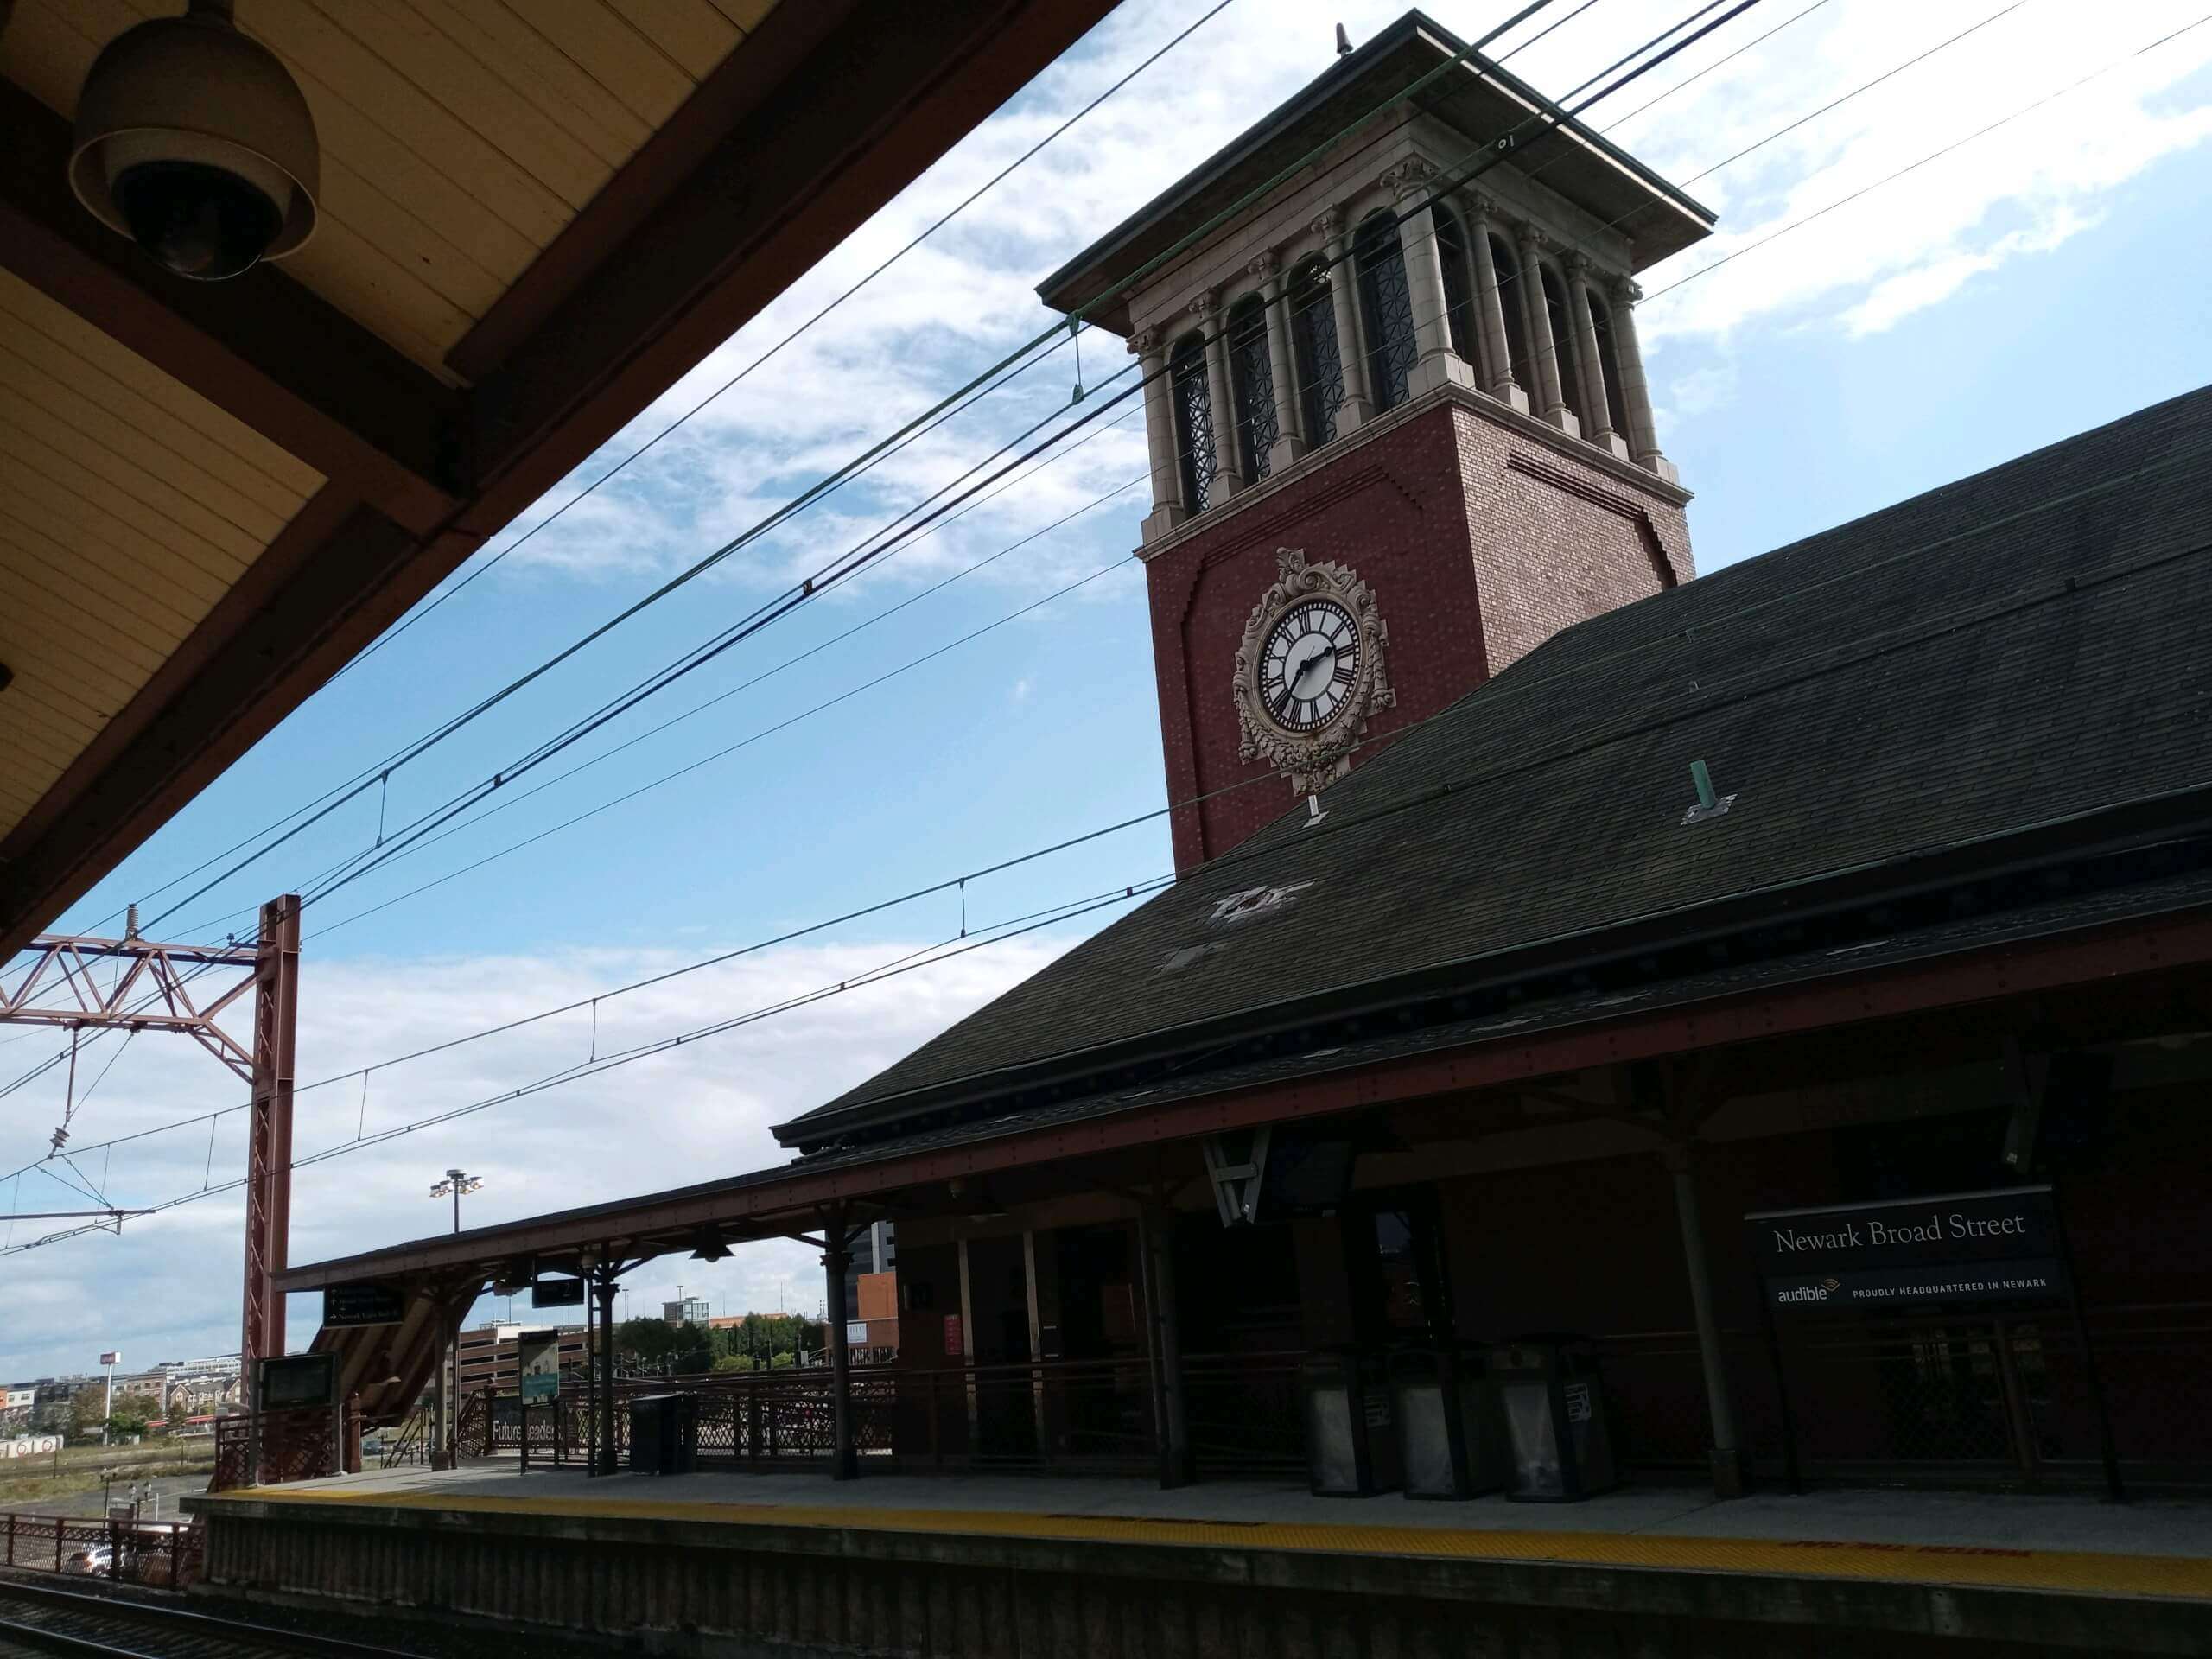 Train station platform in Newark, NJ